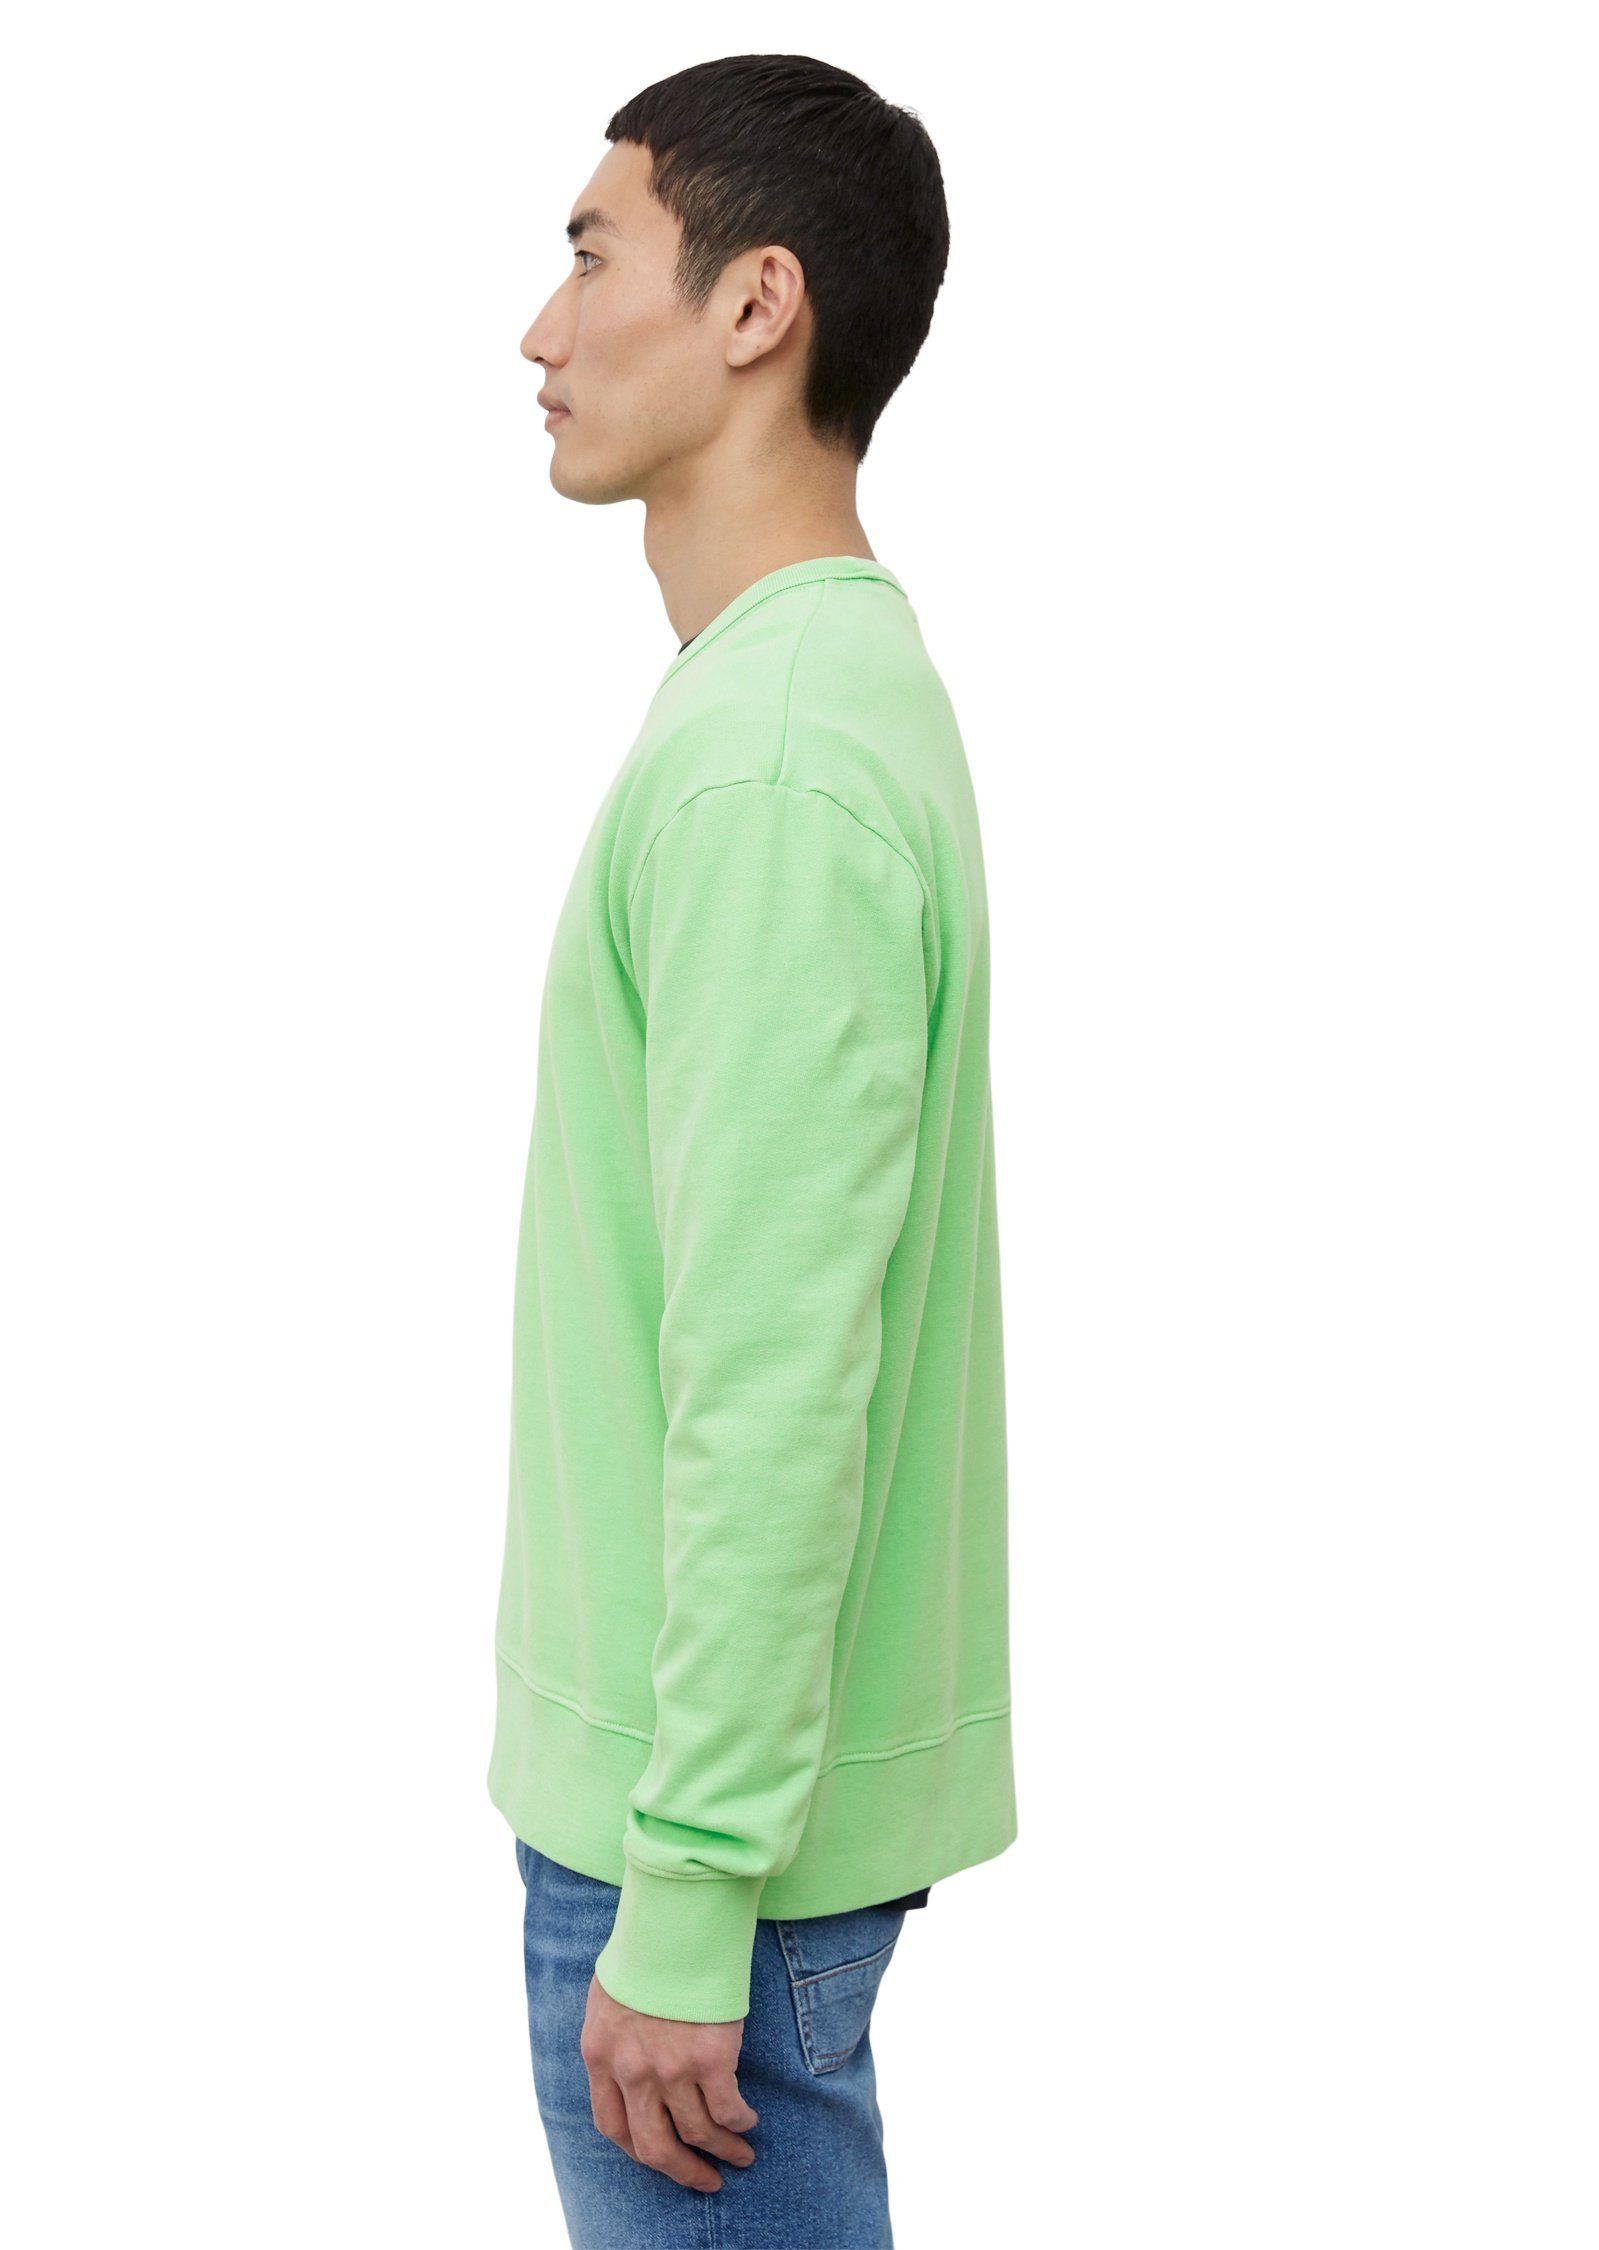 Marc Terry-Sweat-Qualität softer O'Polo grün in Sweatshirt